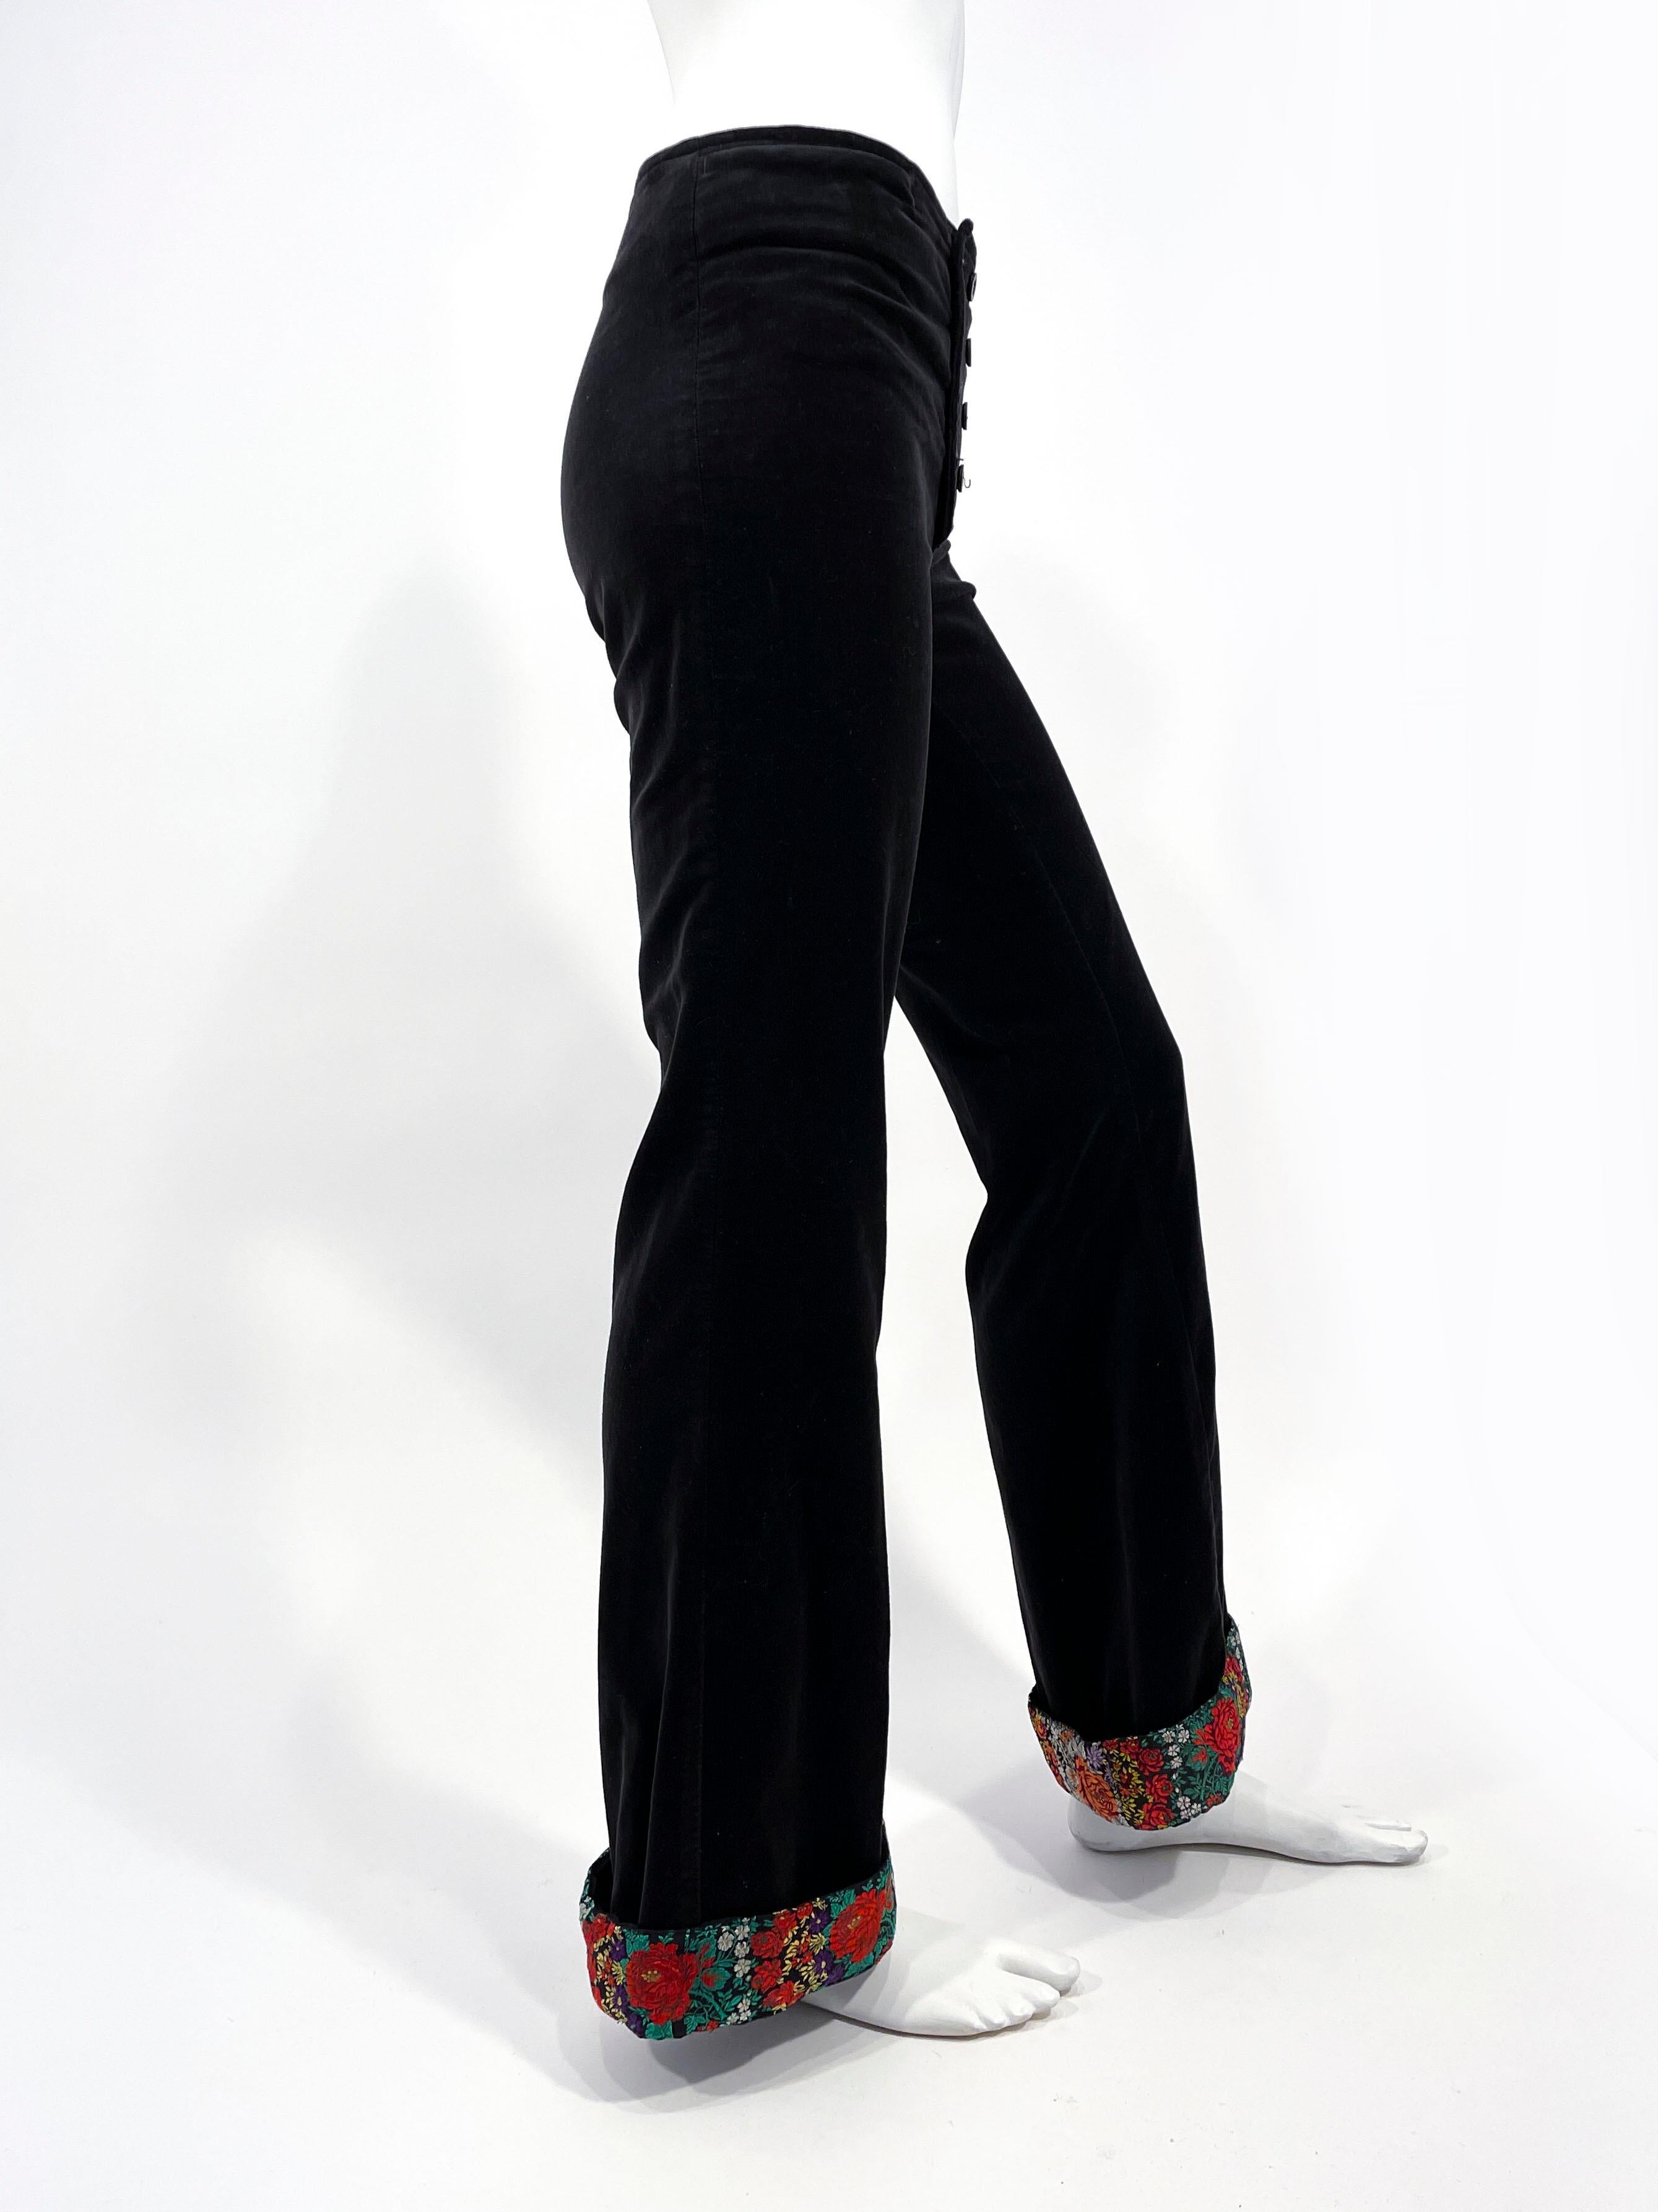 1970s Black Velvet Bellbottom Pants In Good Condition For Sale In San Francisco, CA